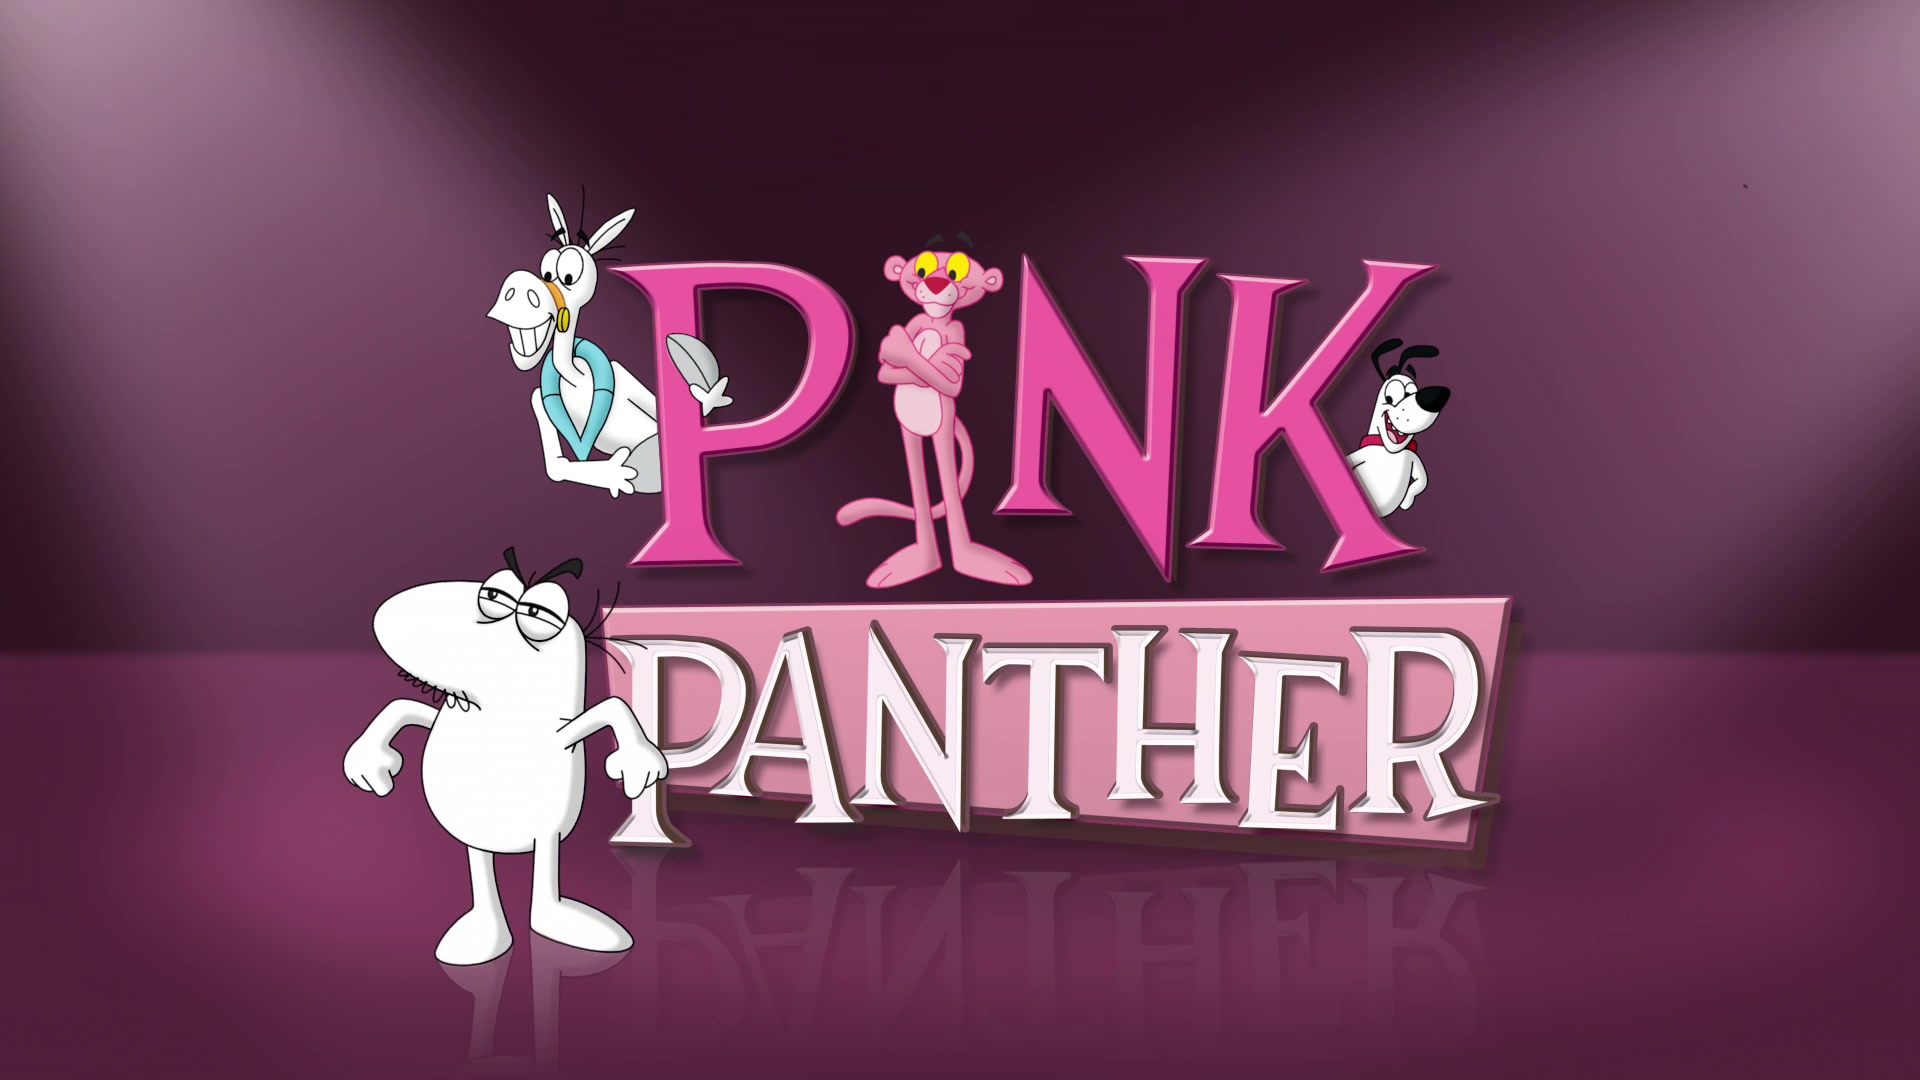 3d pink panther wallpaper hd 1080p